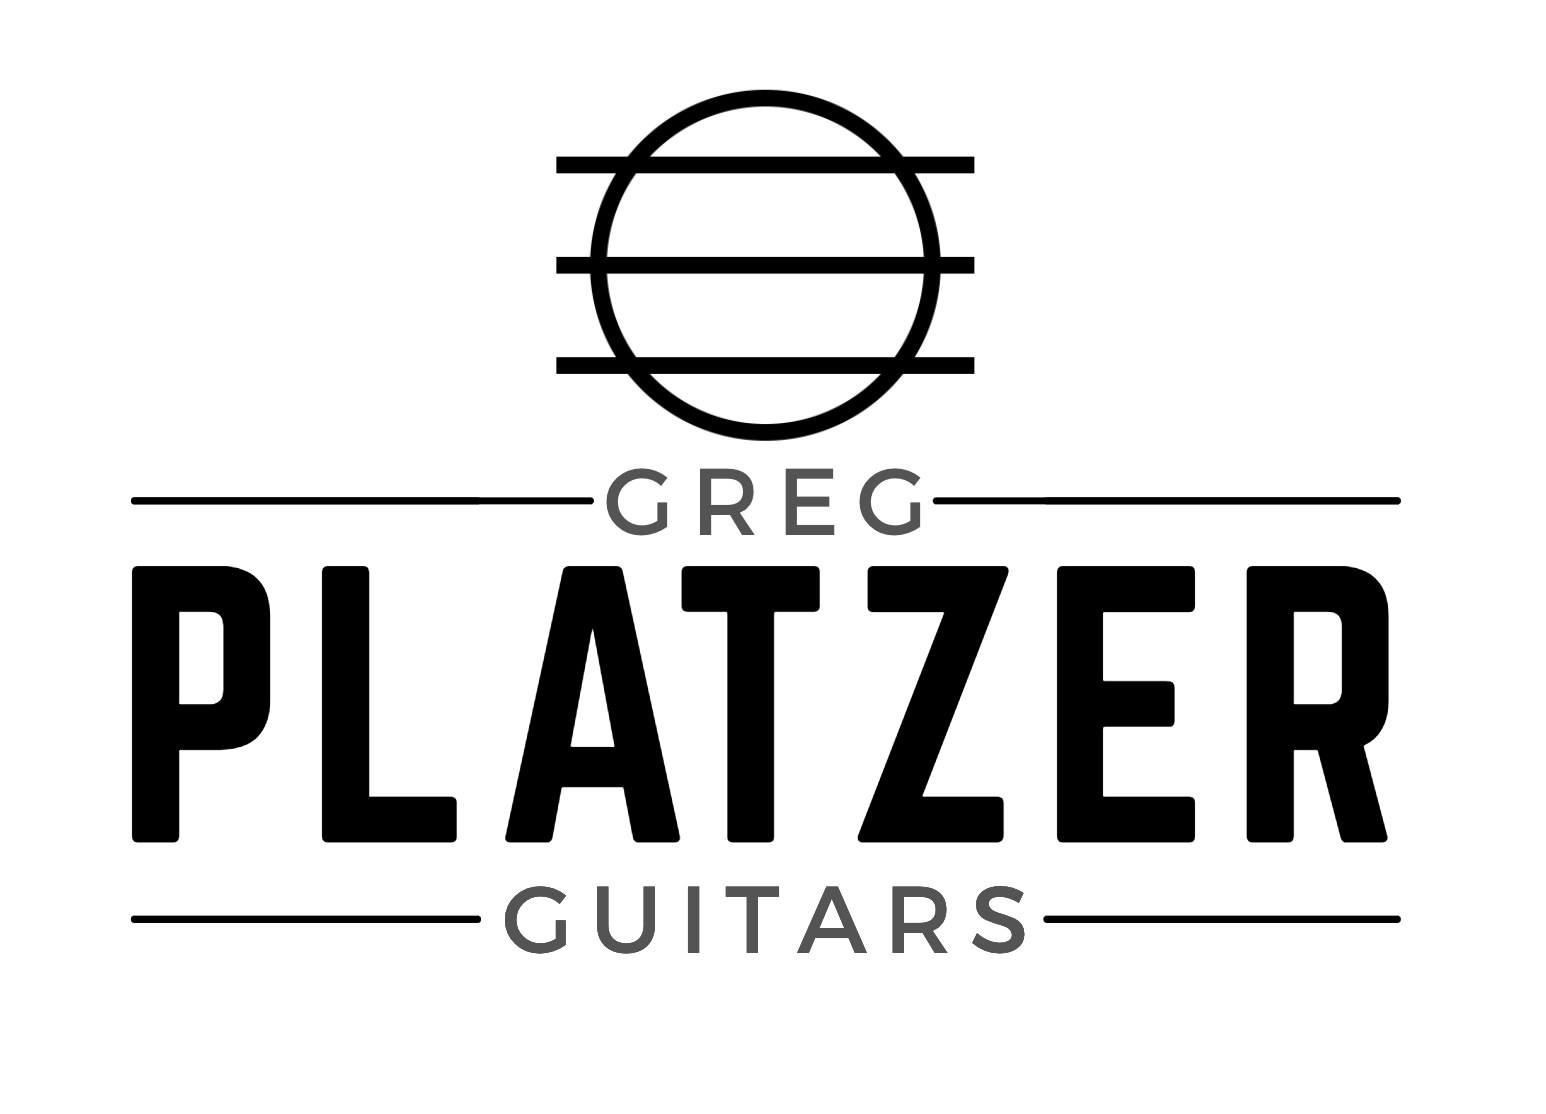 Greg Platzer Guitars